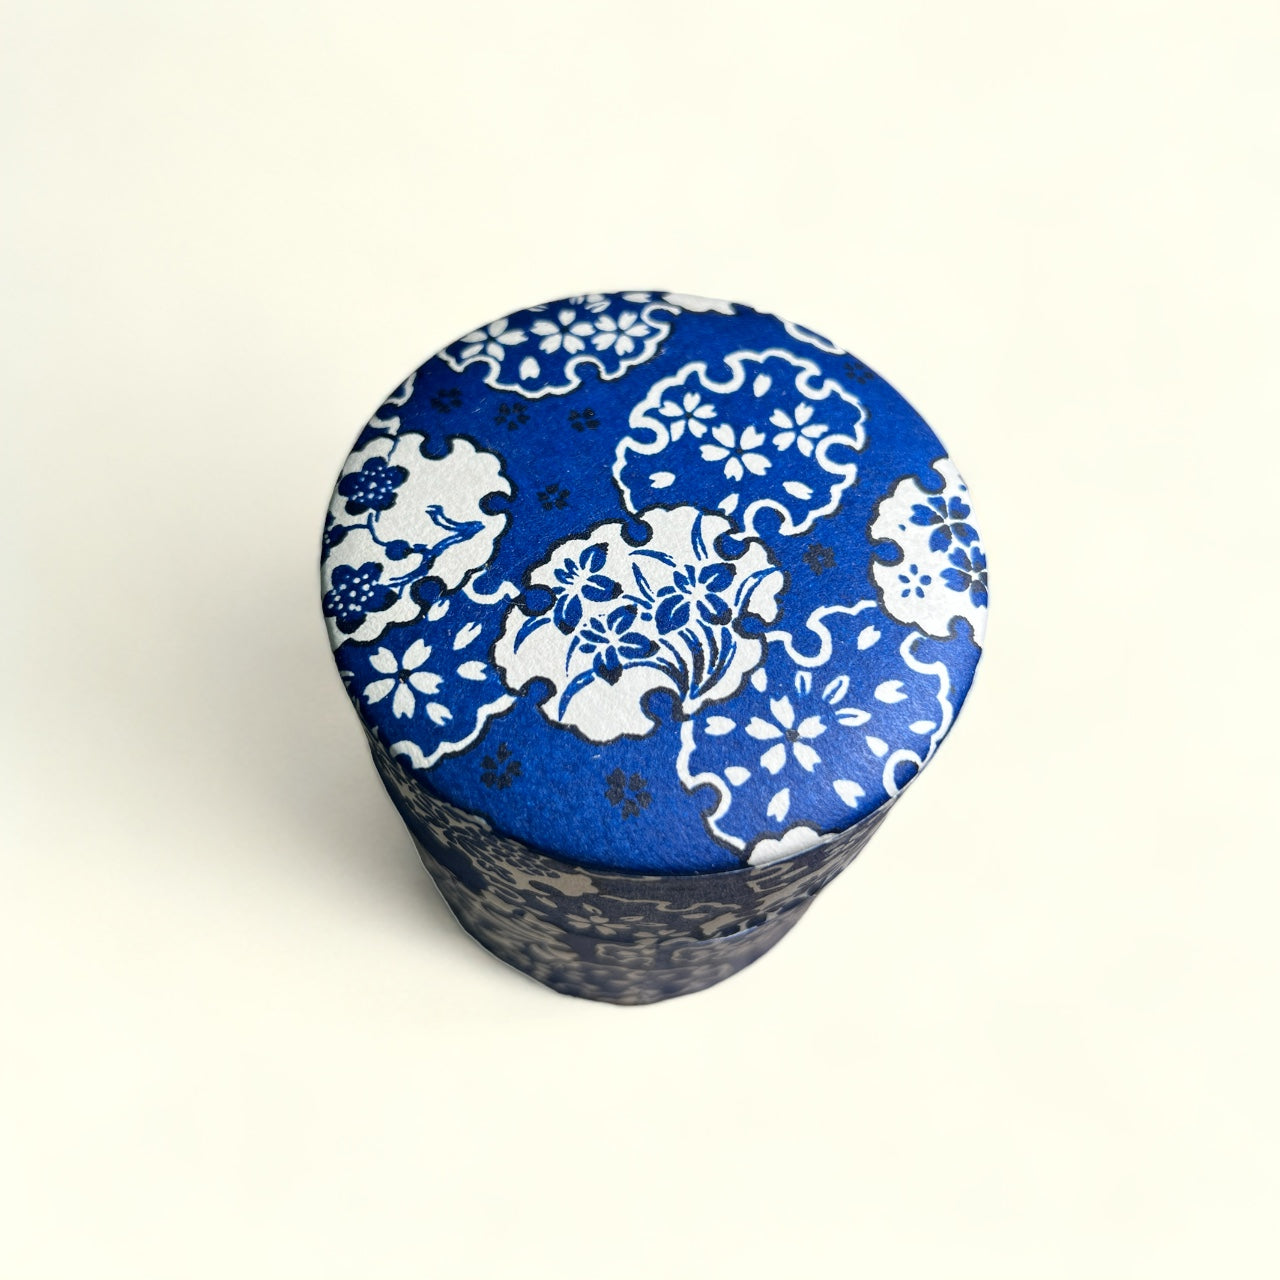 Japanese Chazutsu - Washi Tin Tea Canister Kimono